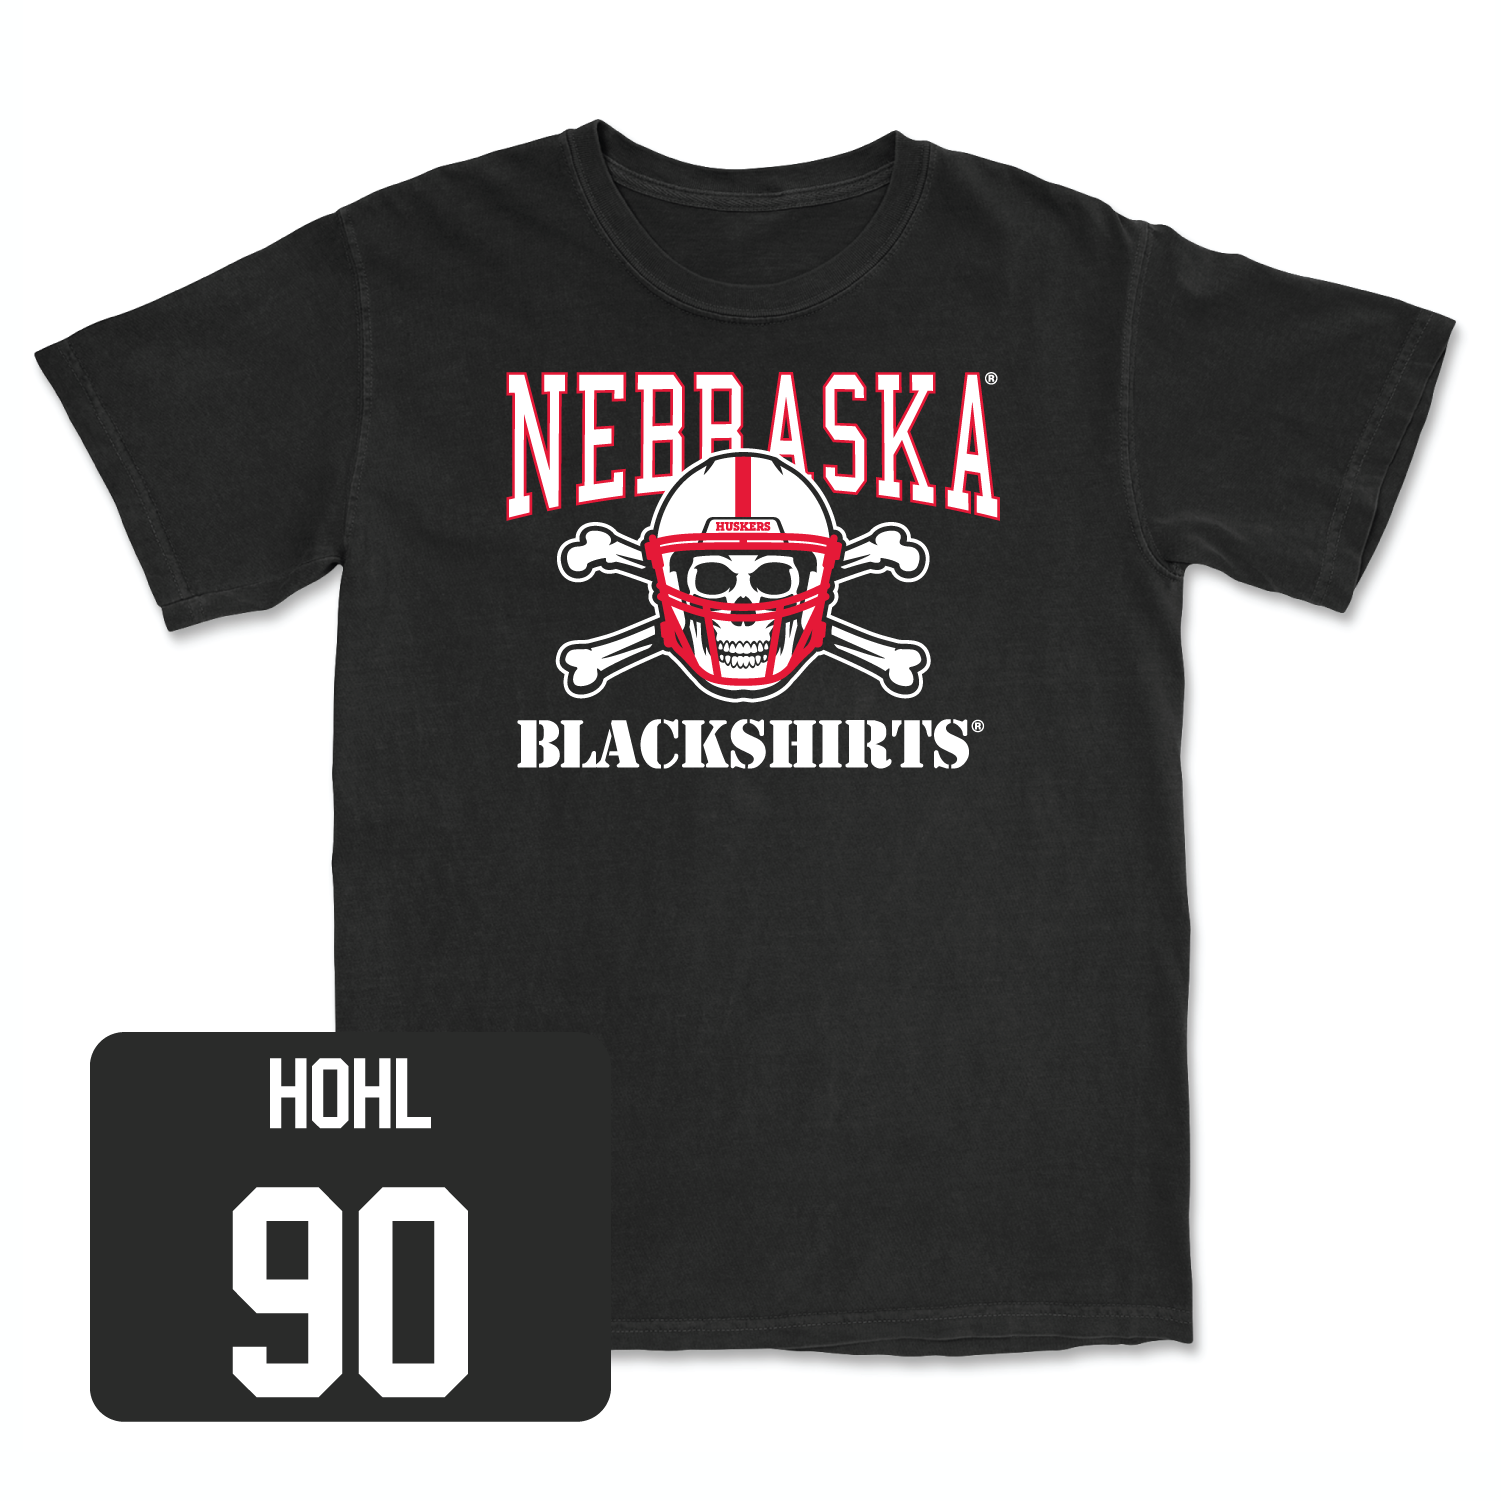 Black Football Blackshirts Tee Medium / Jacob Hohl | #90